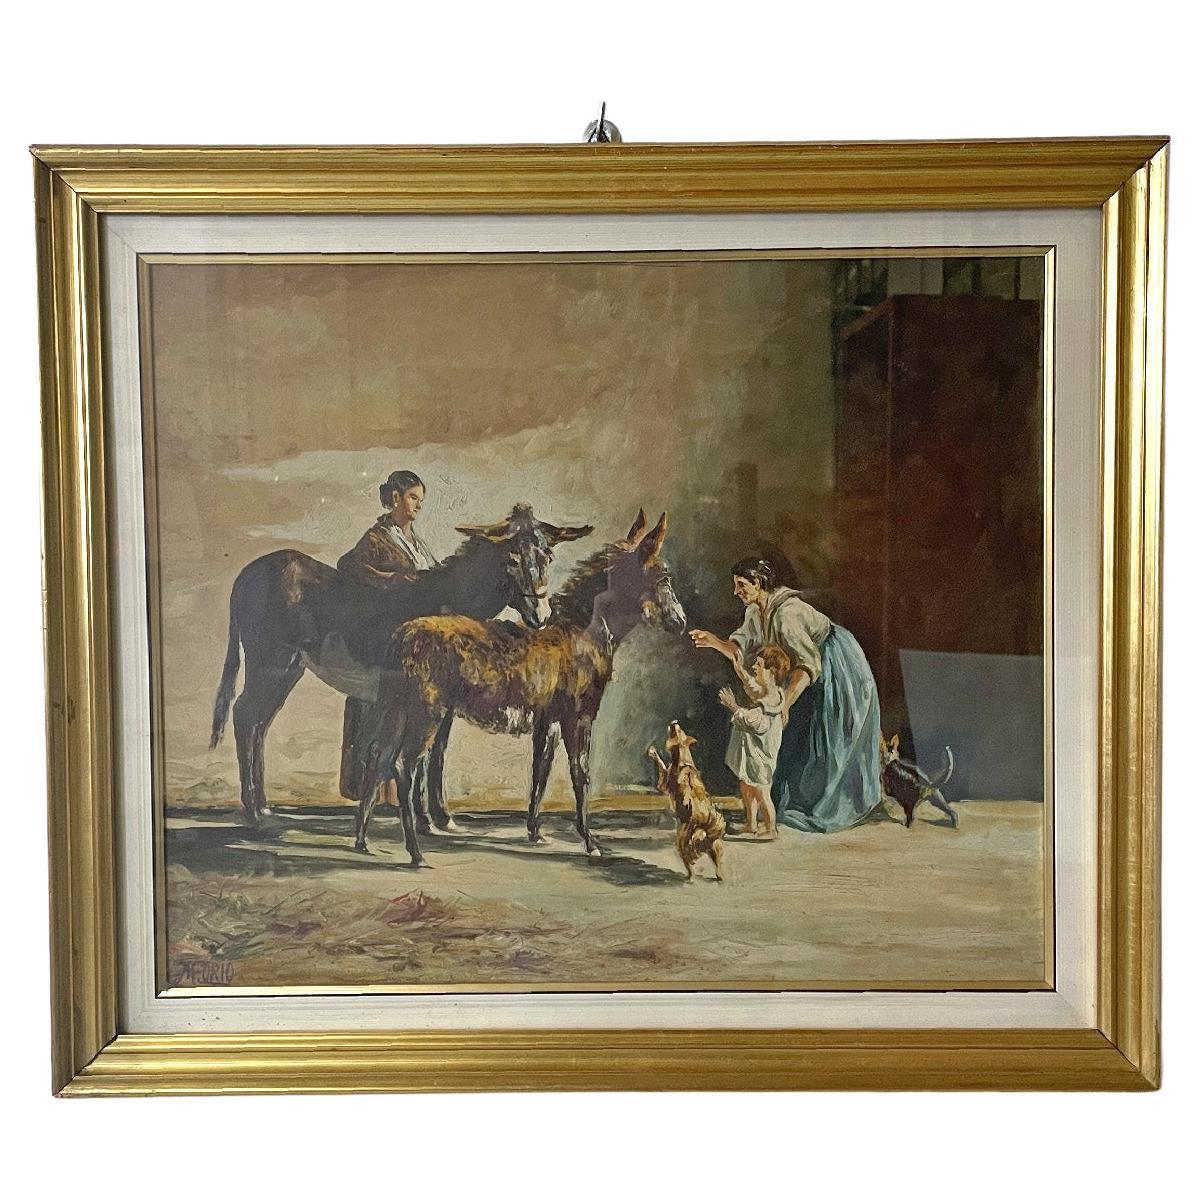 Italian mid-century modern oil painting with donkeys in golden frame, 1960s